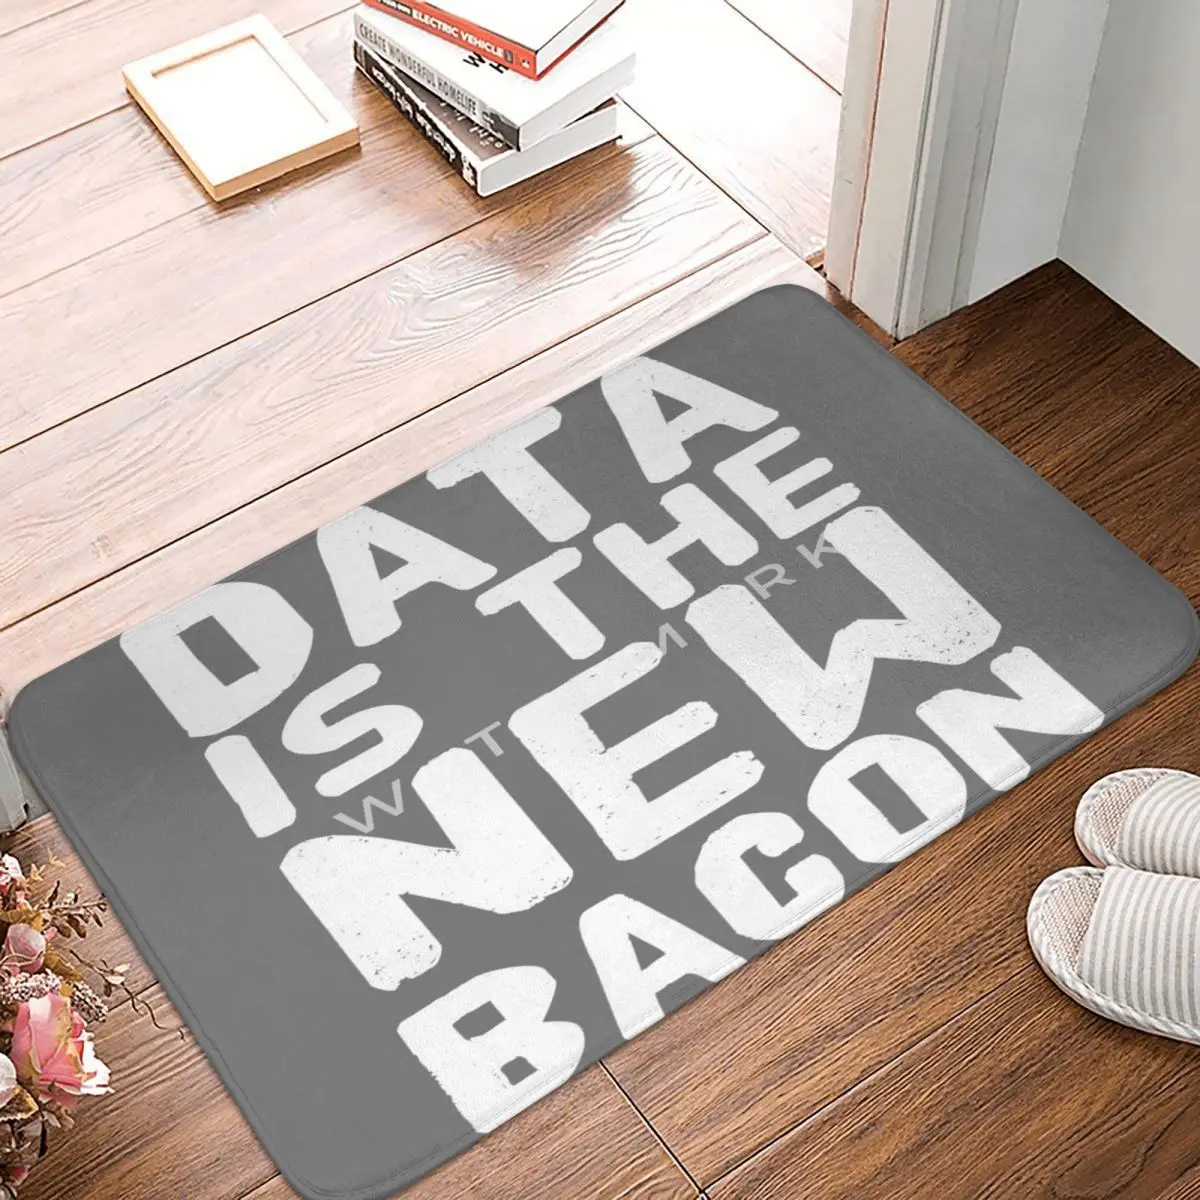 

Data Is The New Bacon Carpet, Polyester Floor Mats Modern Doorway Indoor Festivle Gifts Mats Customizable